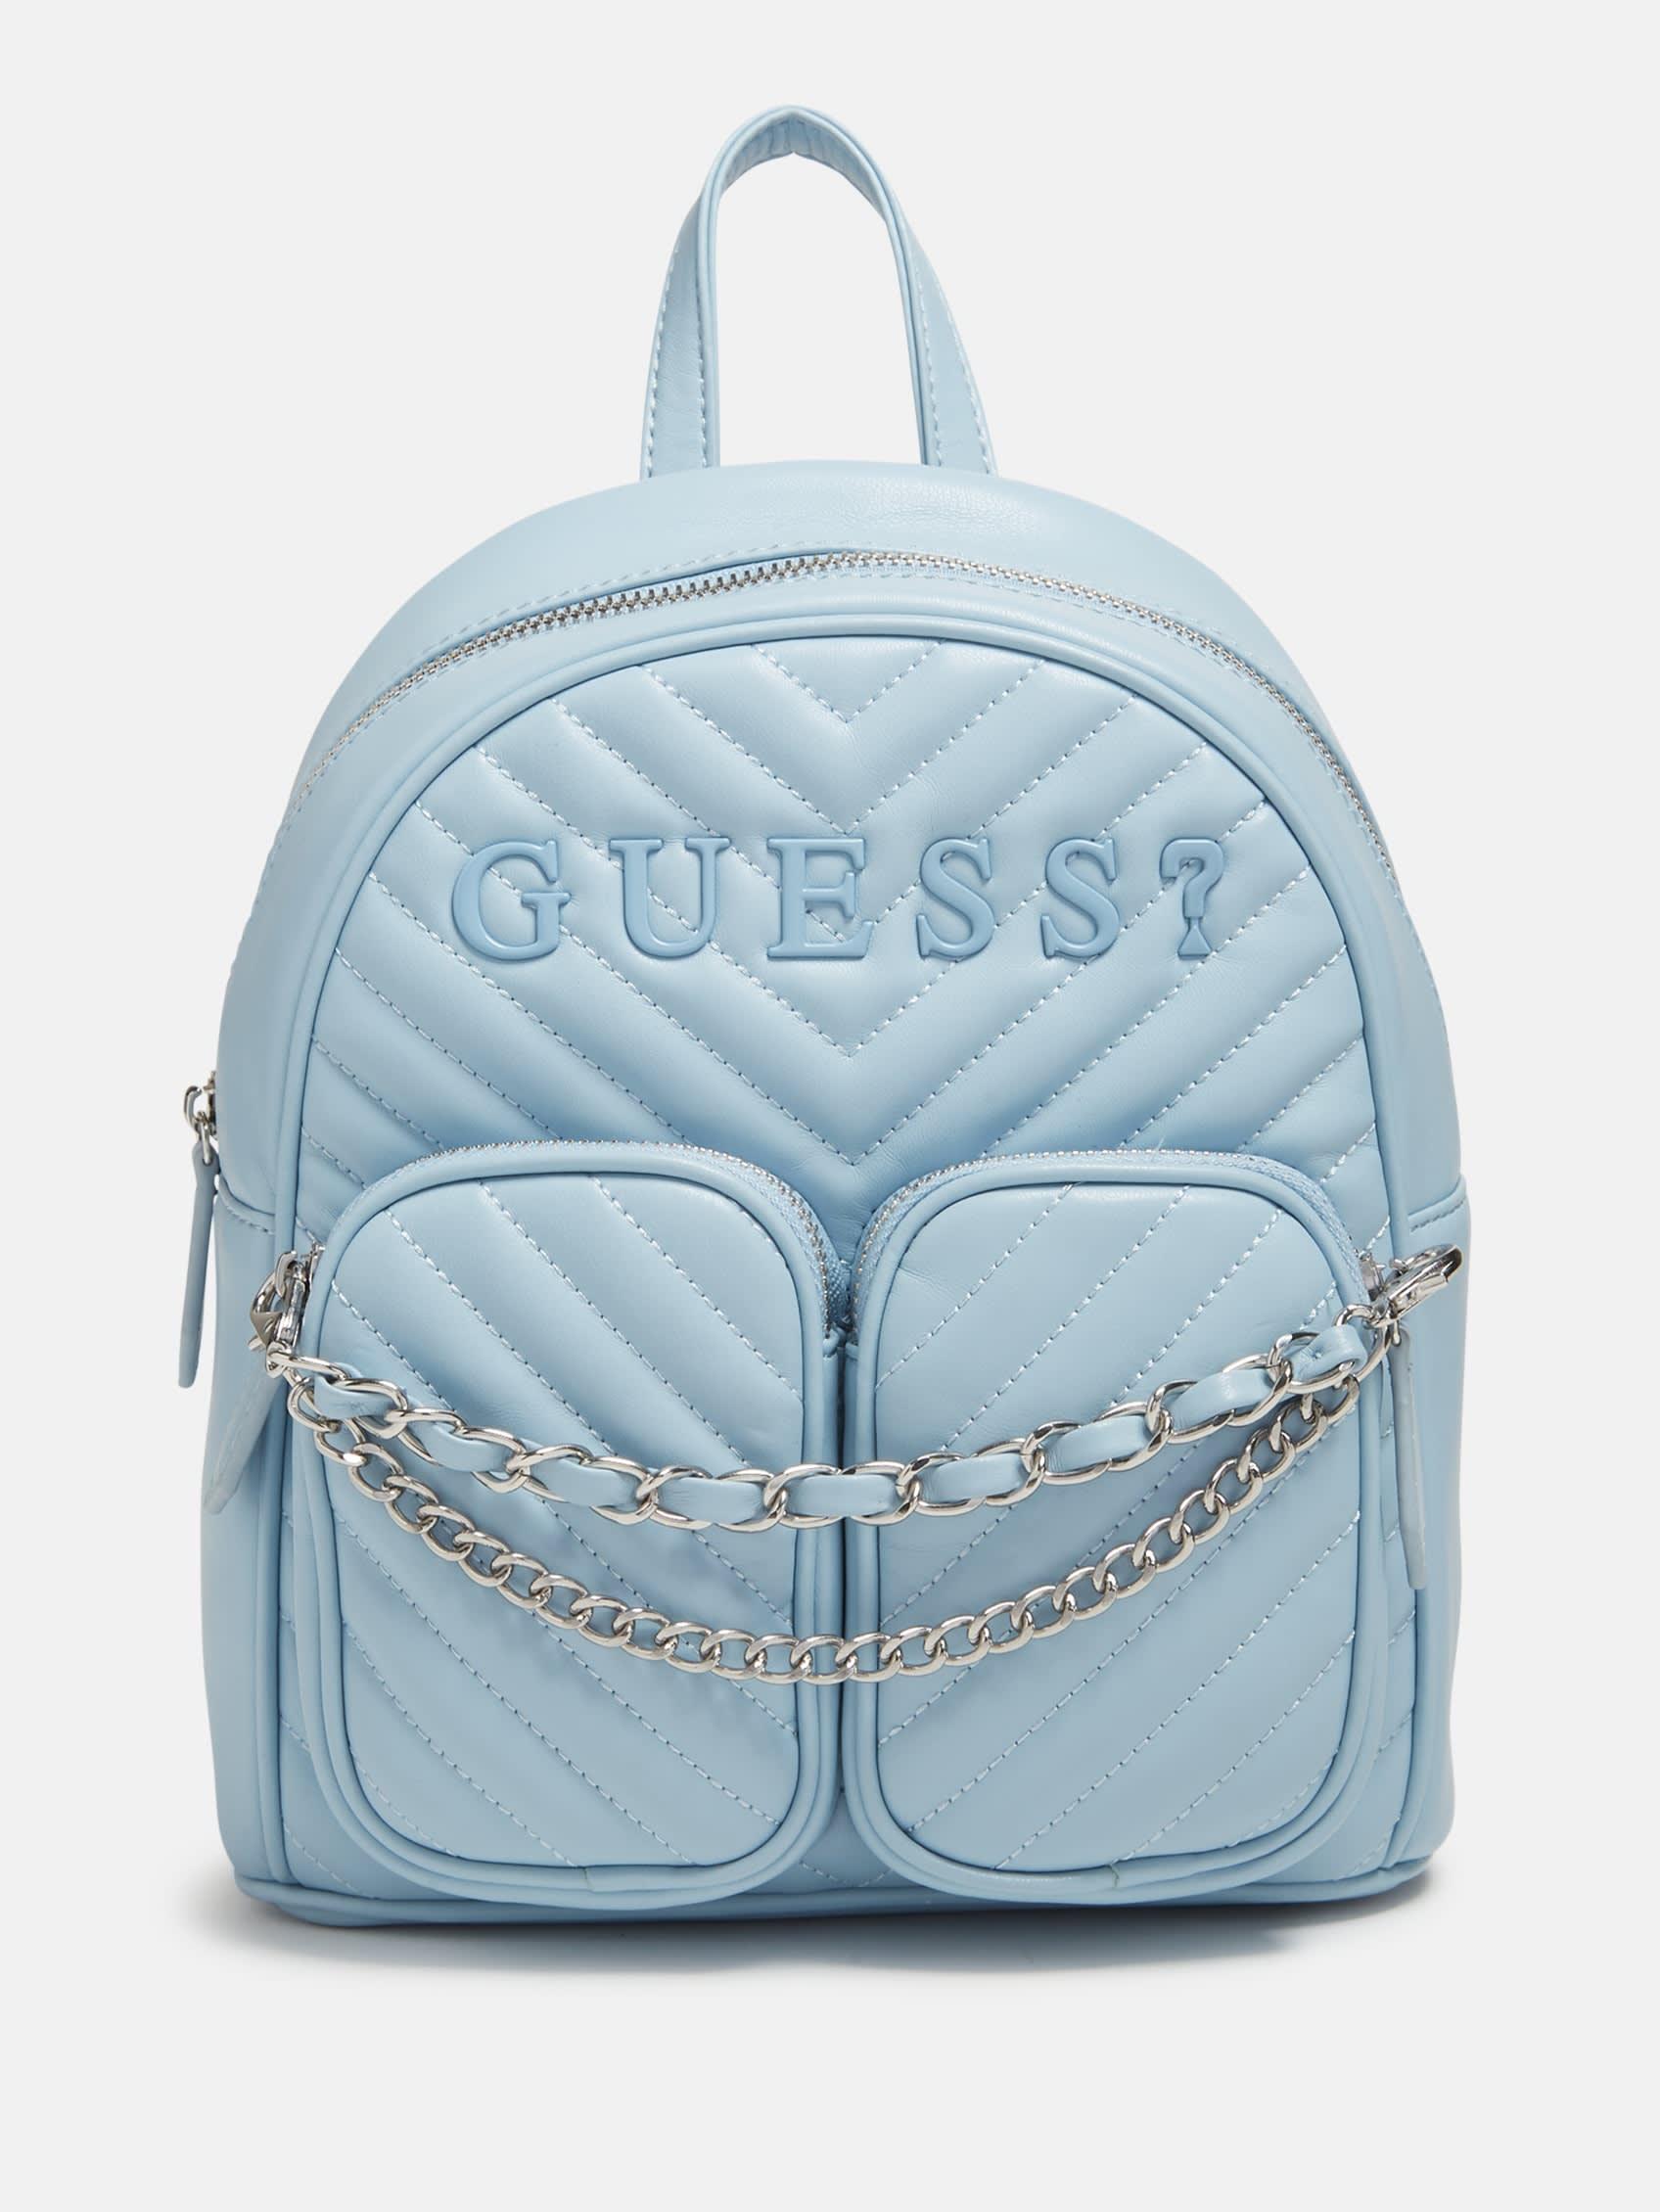 Designer Backpacks Guess | Guess handbags, Guess backpack, Guess bags